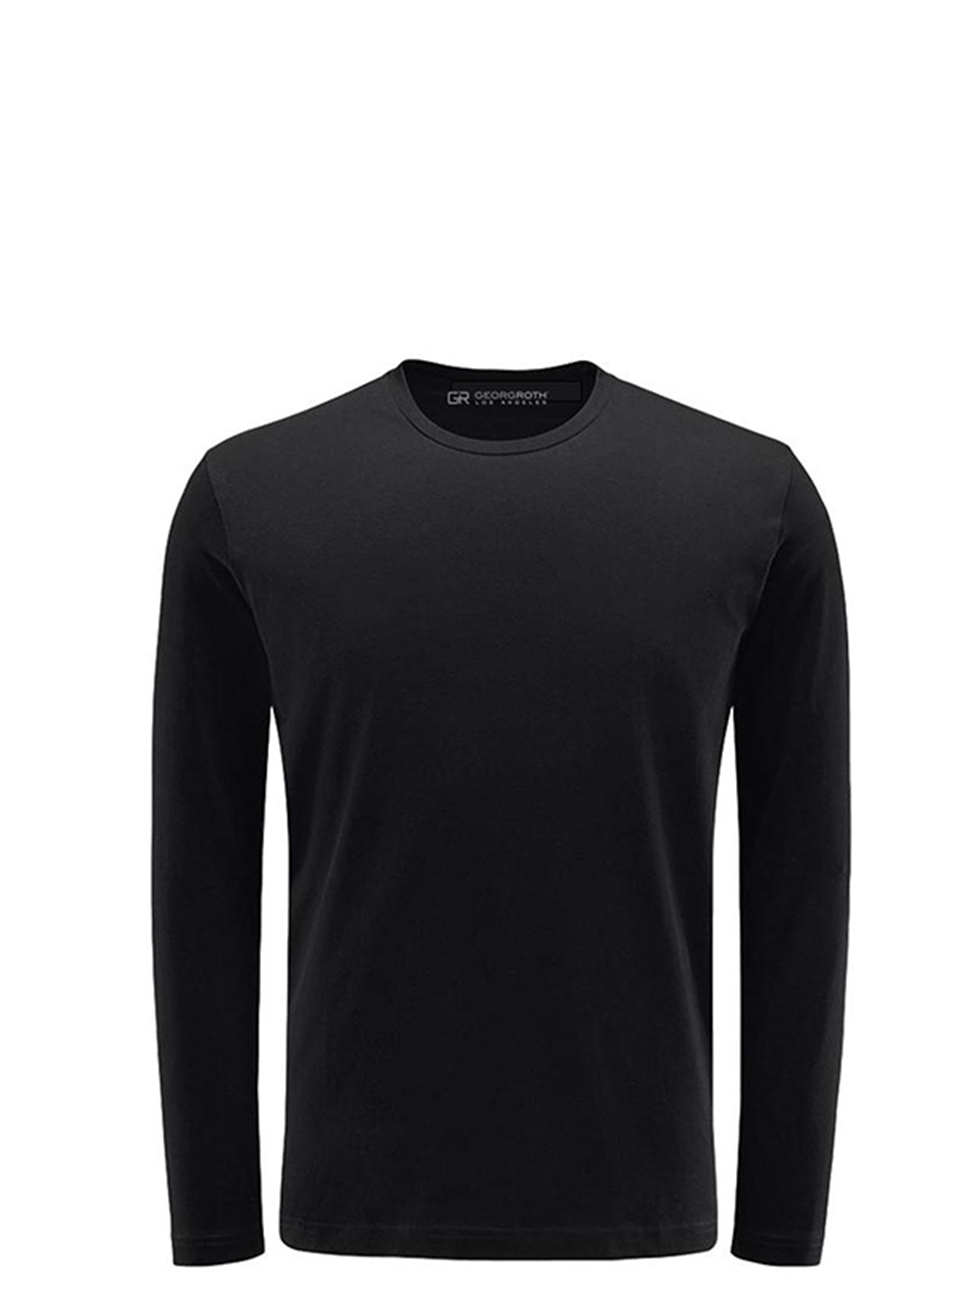 Black Pima Cotton Crew Neck Long Sleeve T shirt | Georg Roth t Shirts ...